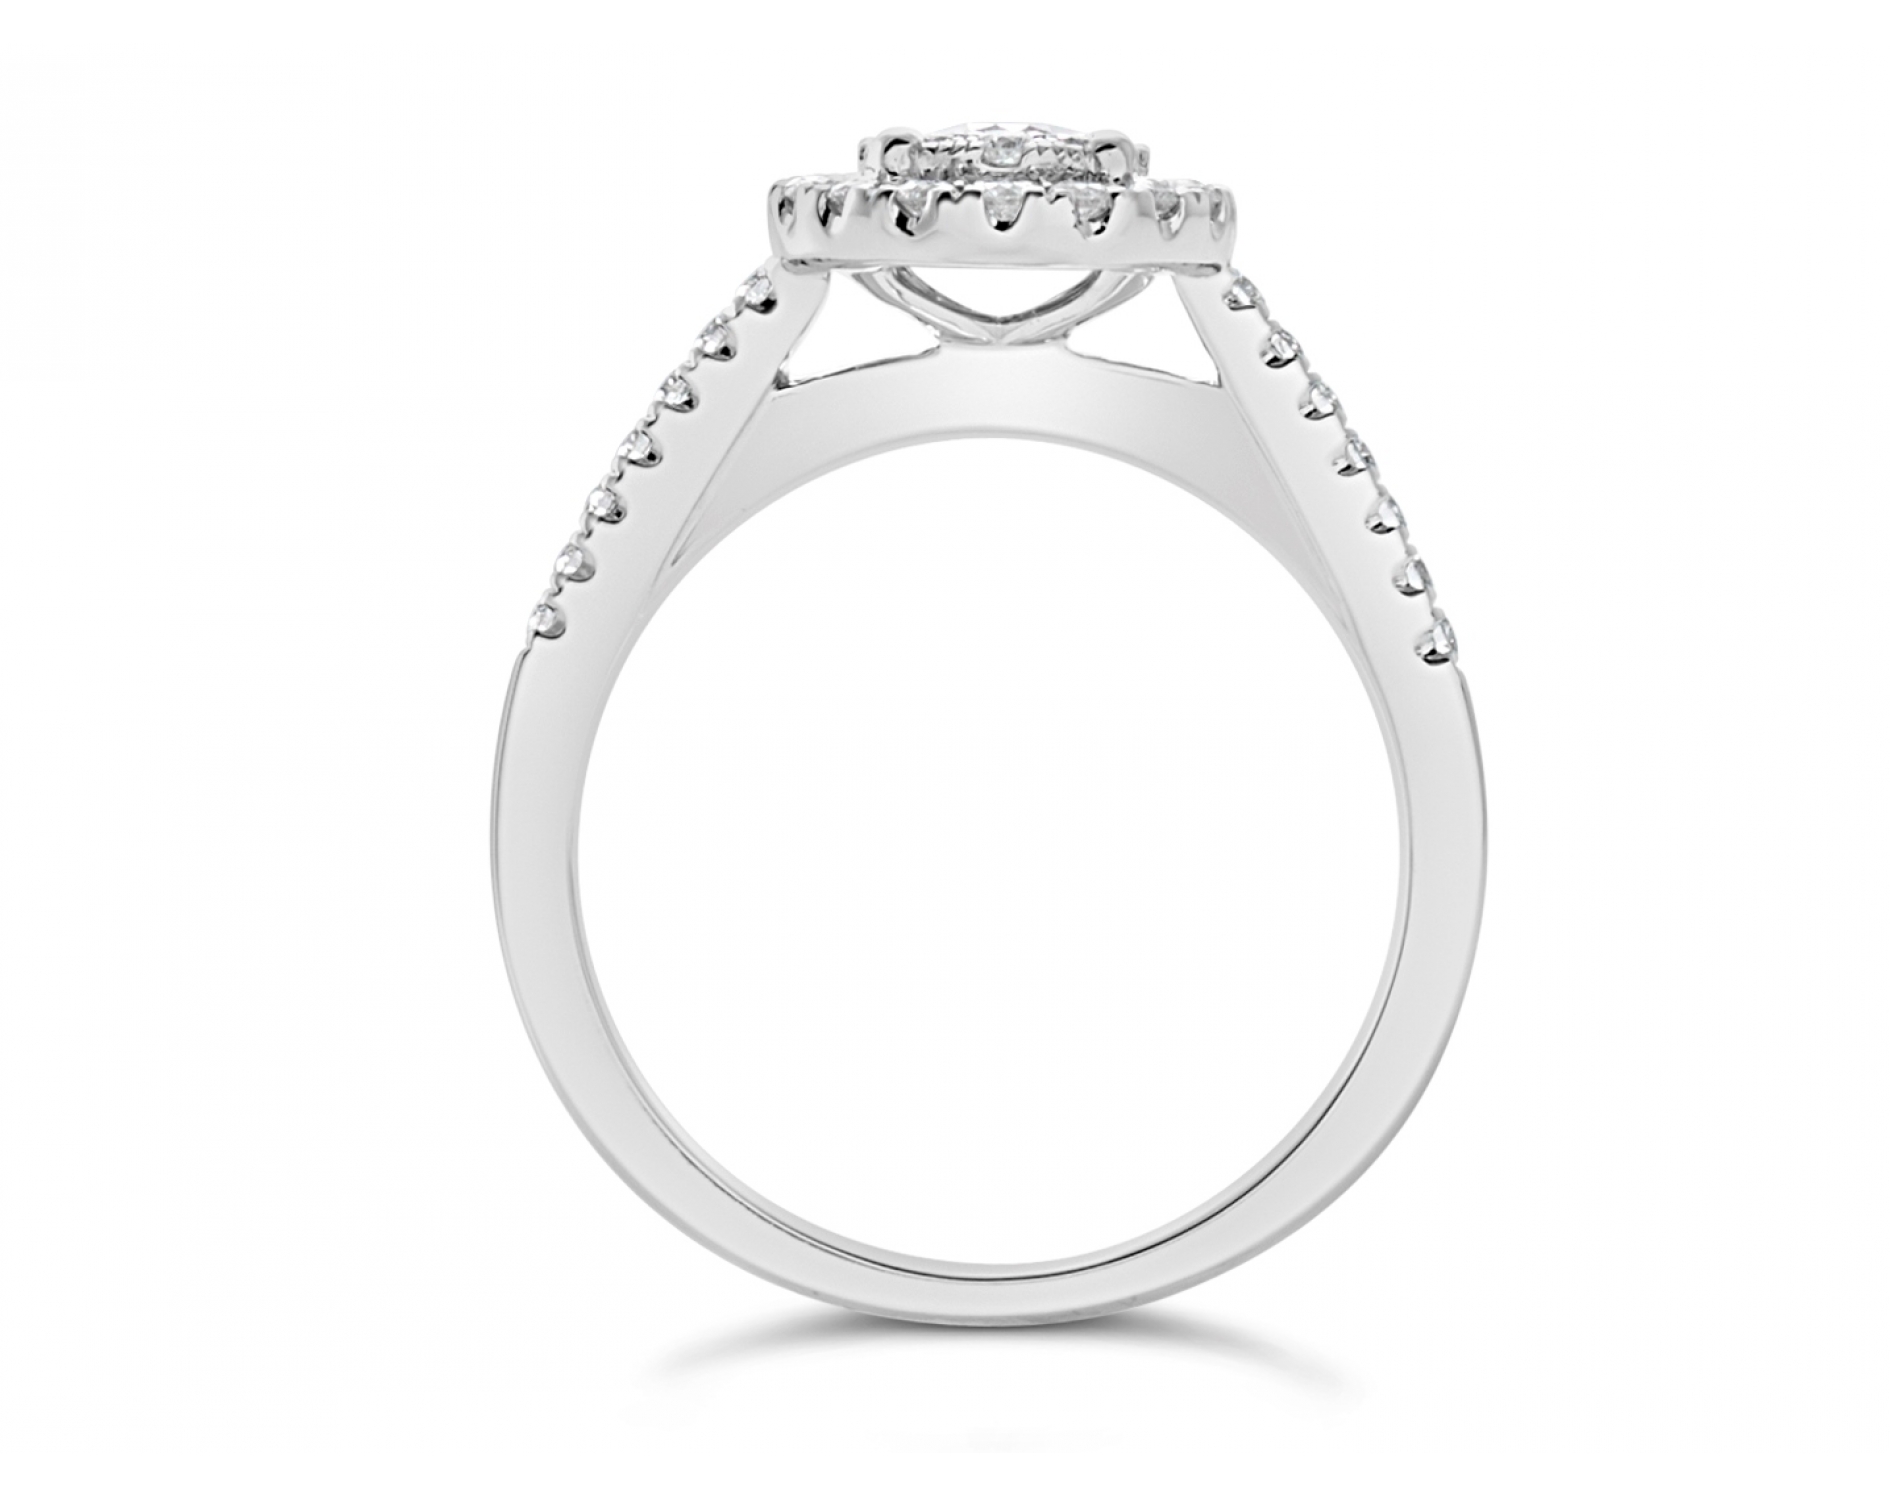 18k white gold halo illusion set engagement ring with pave set sidestones Photos & images